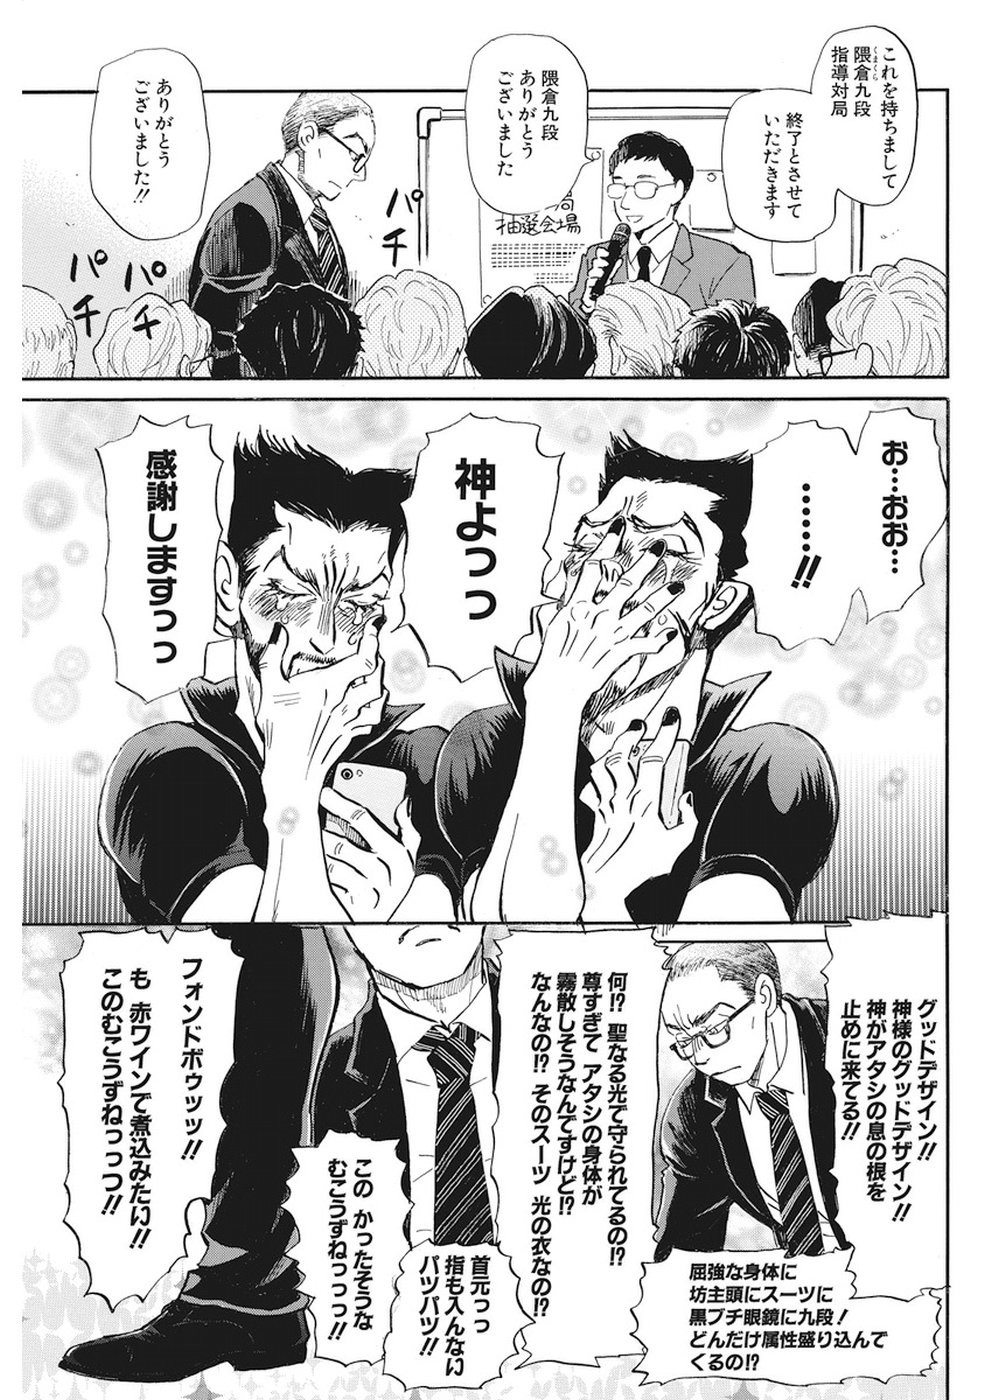 3 Gatsu no Lion - Chapter 152 - Page 3